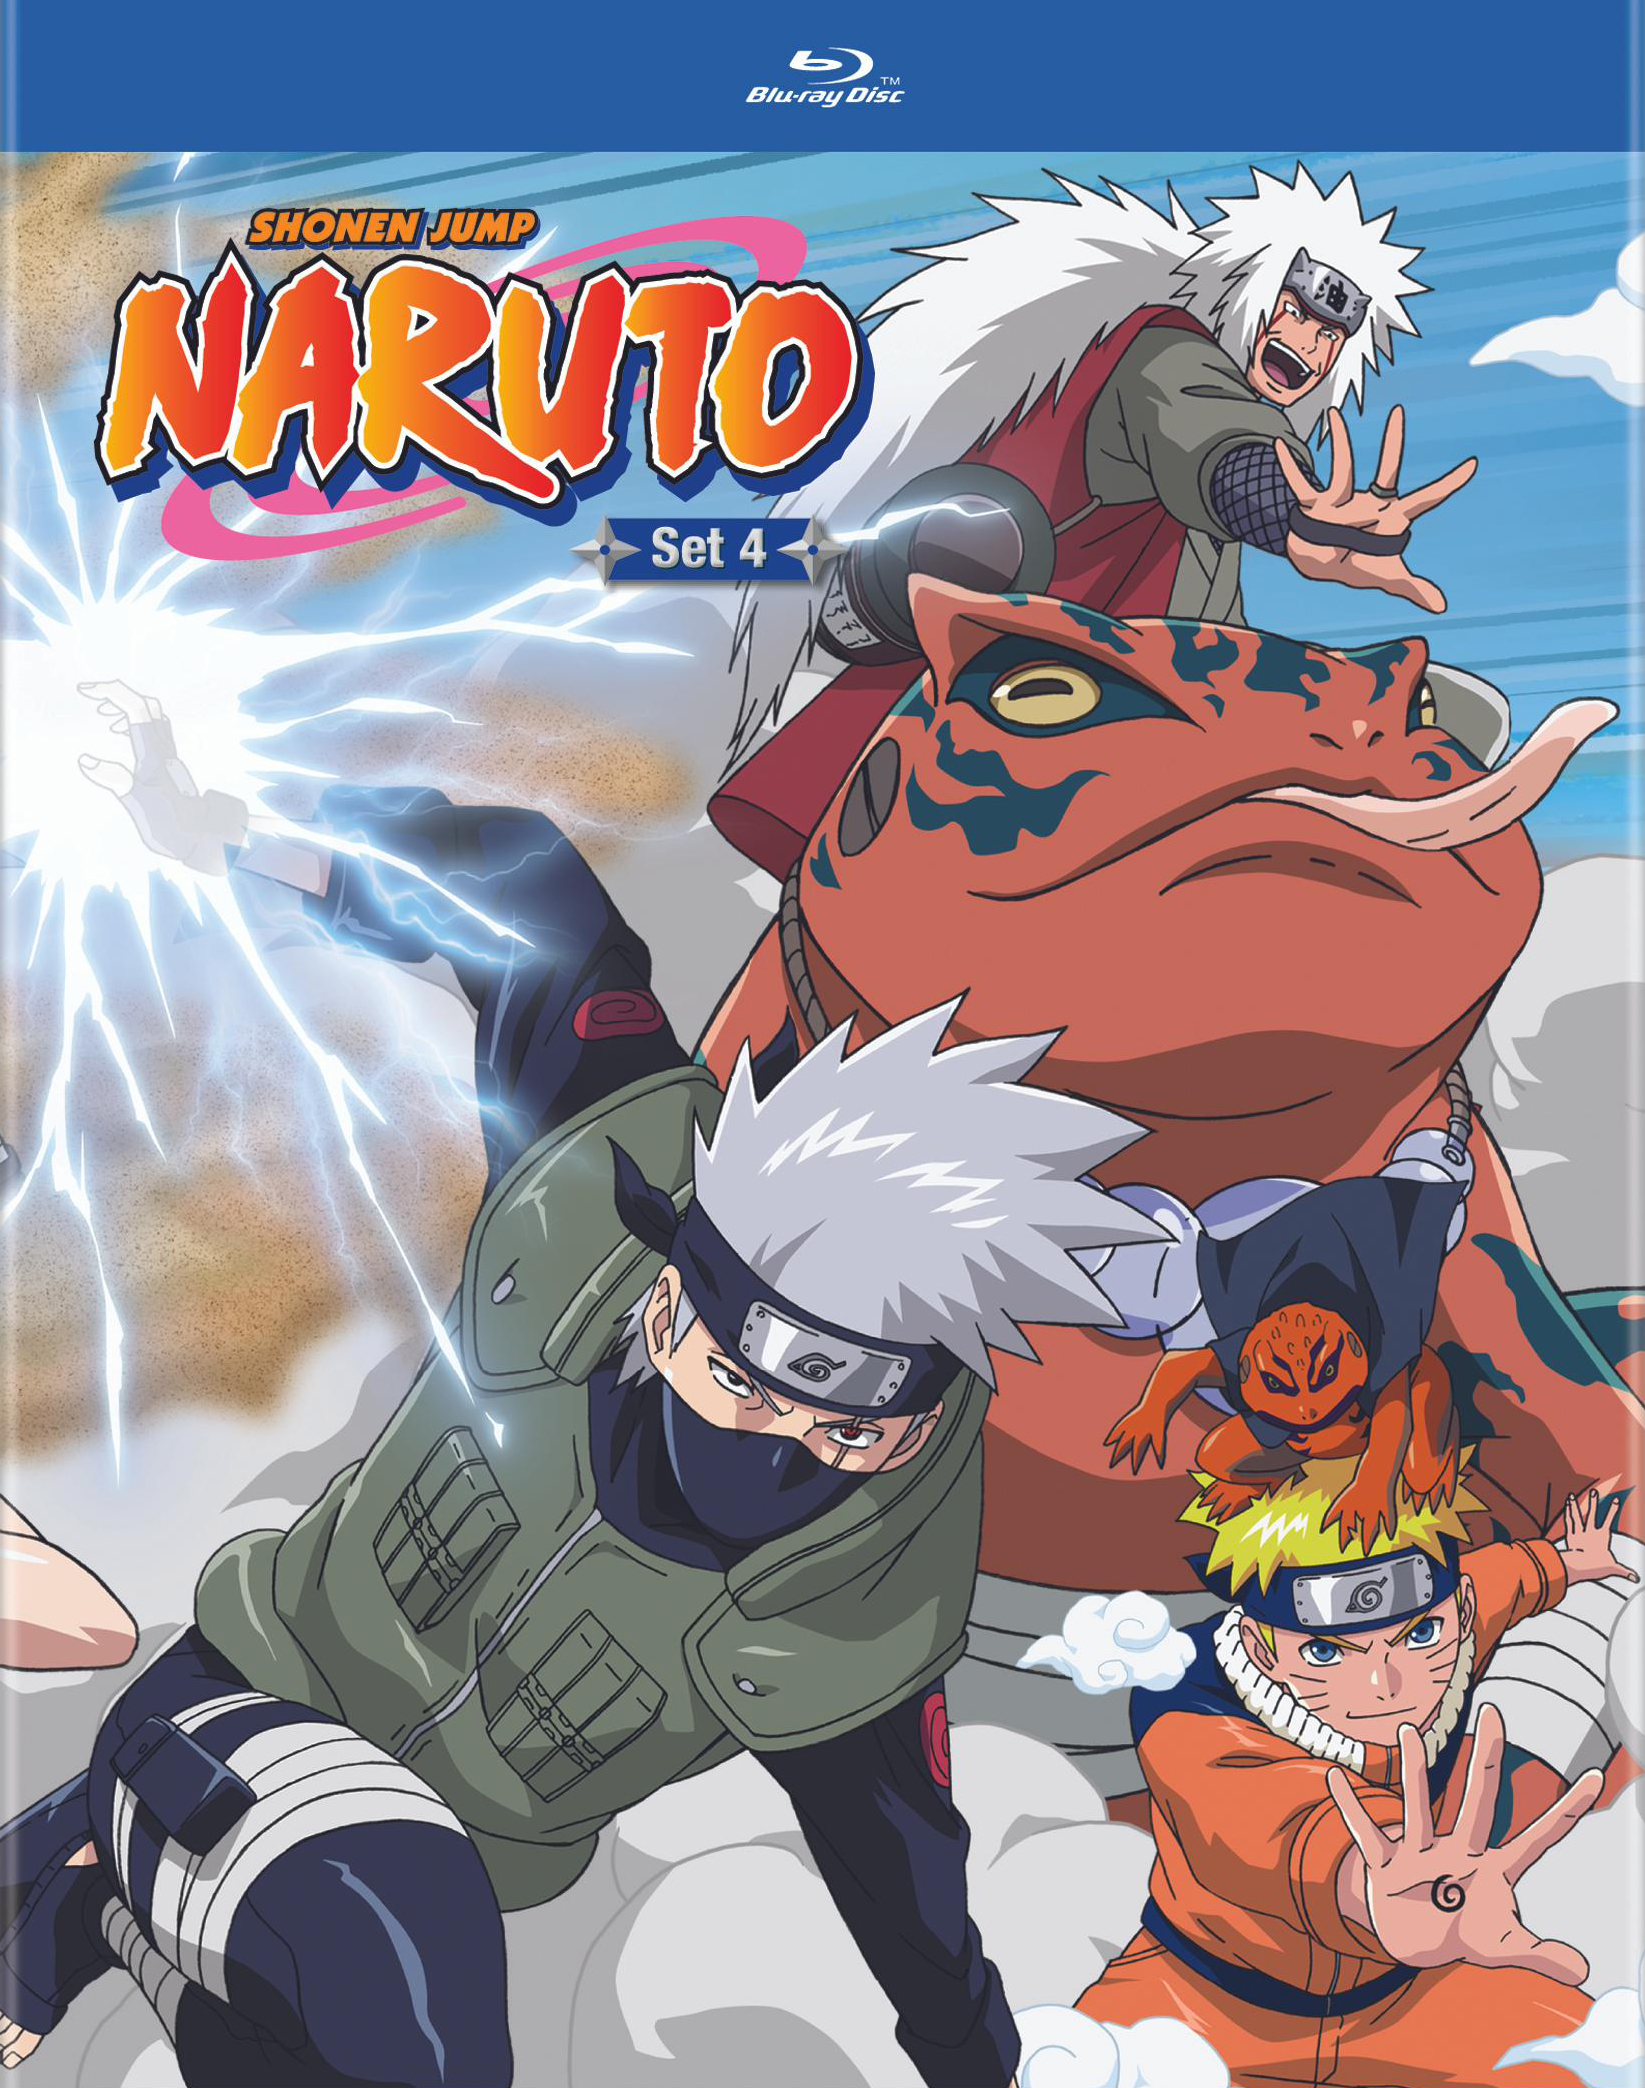 Naruto Shippuden Raises the Stakes in 1st Blu-ray Set!